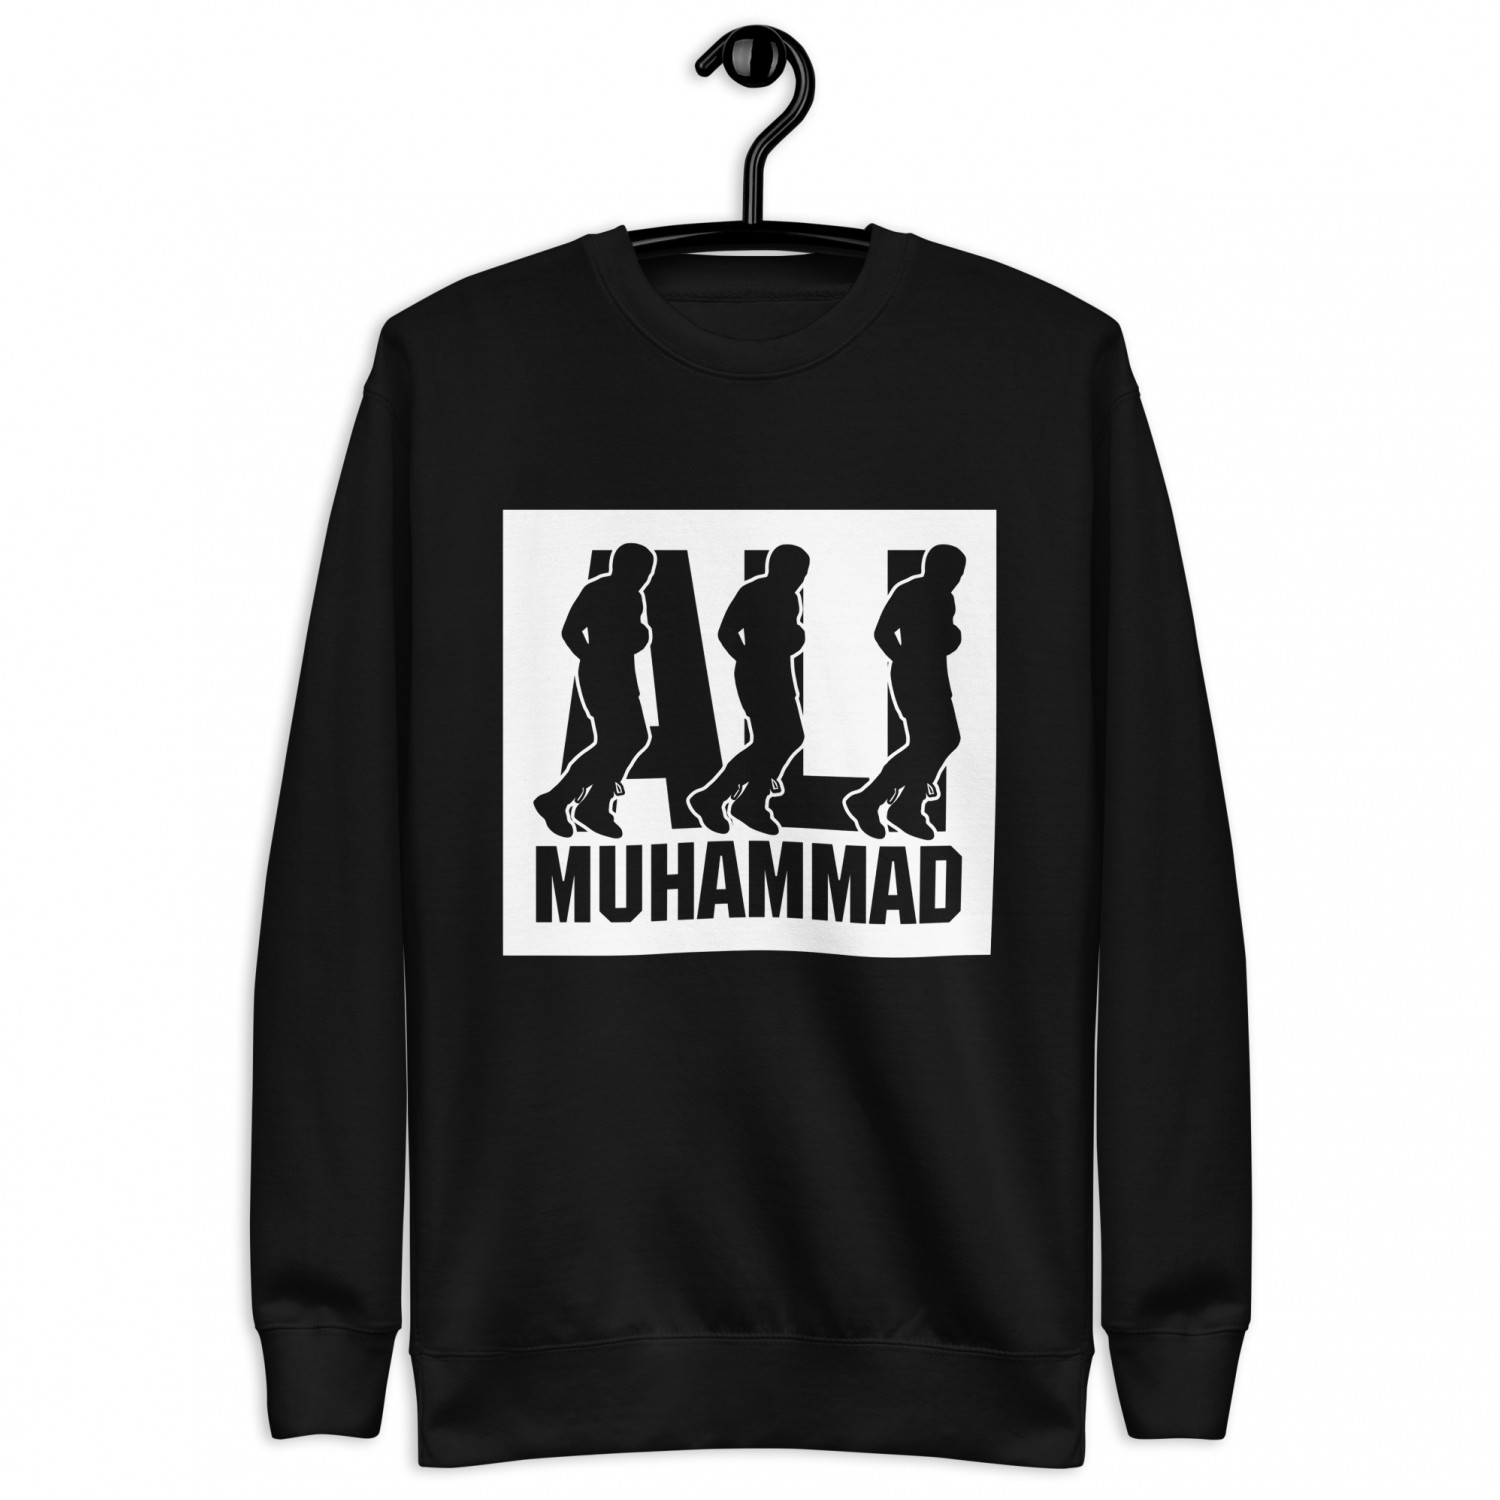 Kup bluzę Muhammad Ali